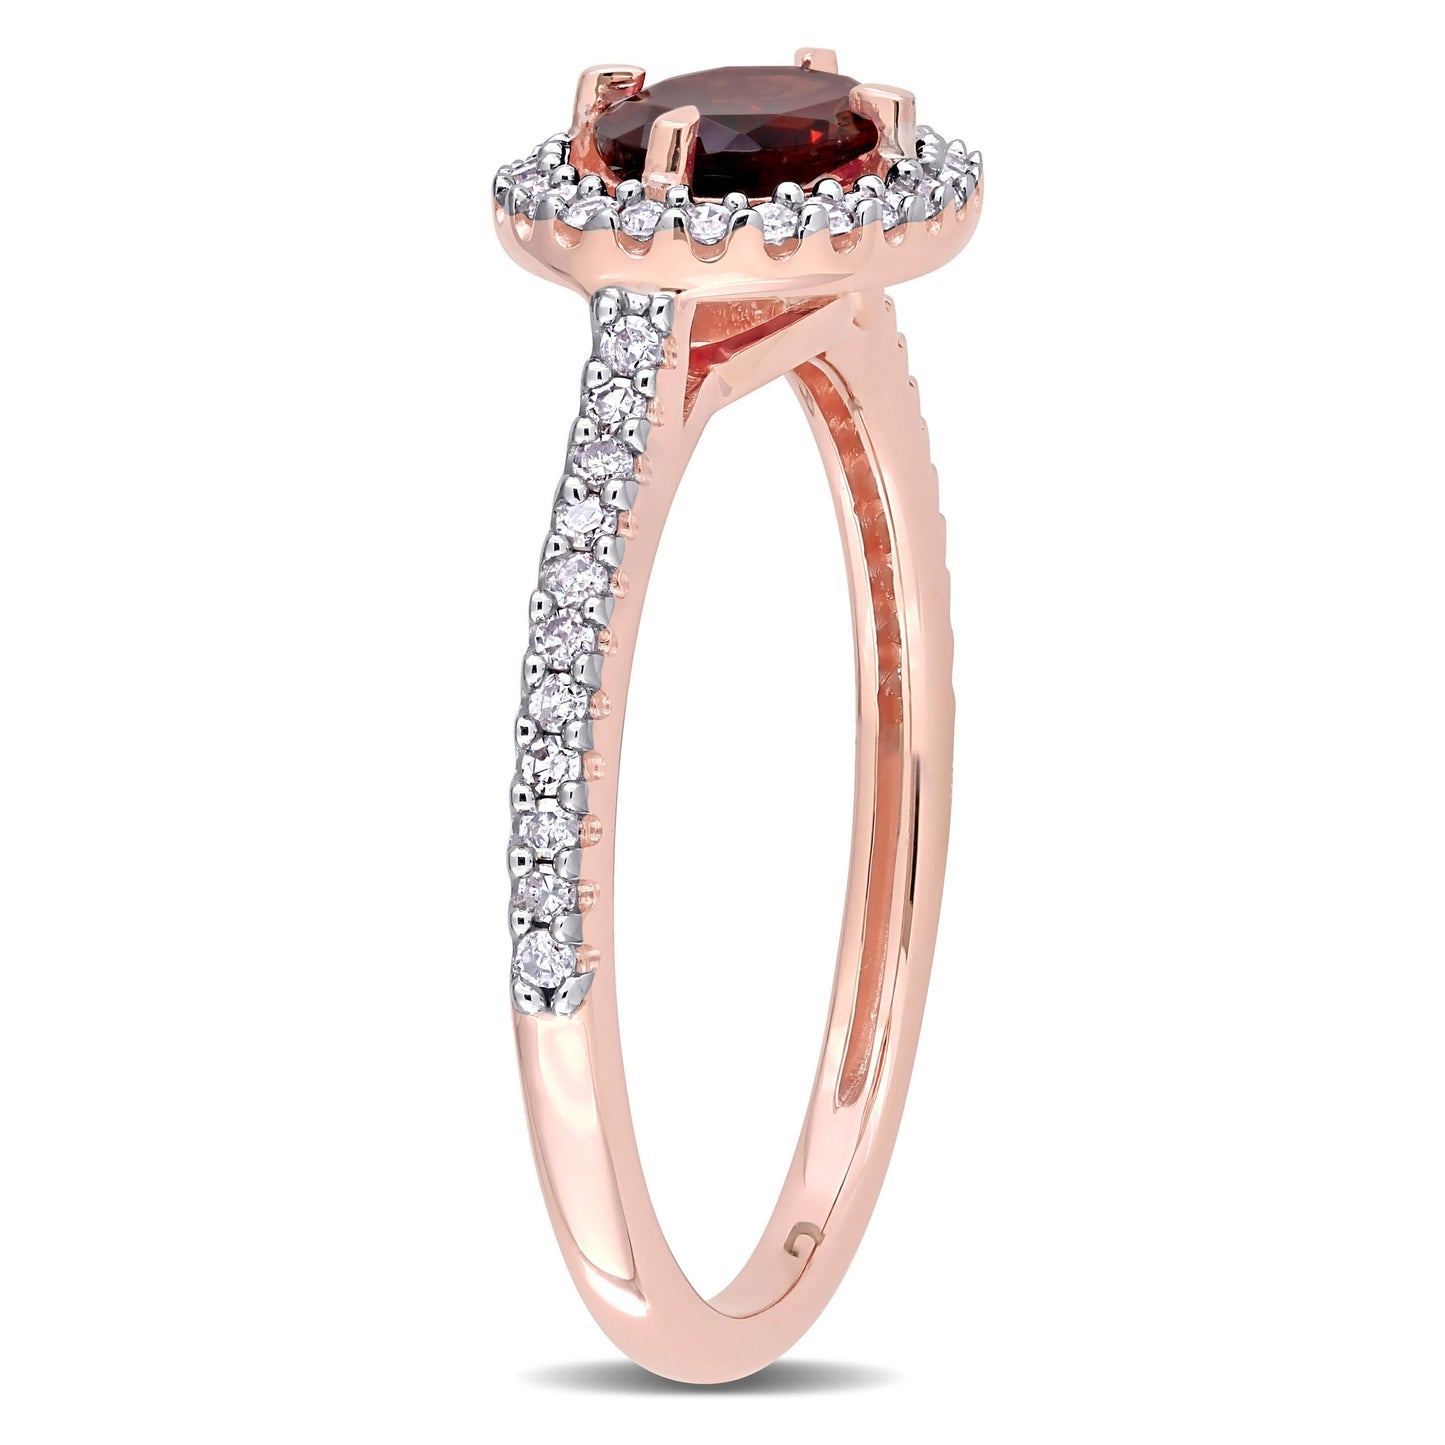 Sophia B 1ct Garnet & 1/4ct Diamond Halo Ring